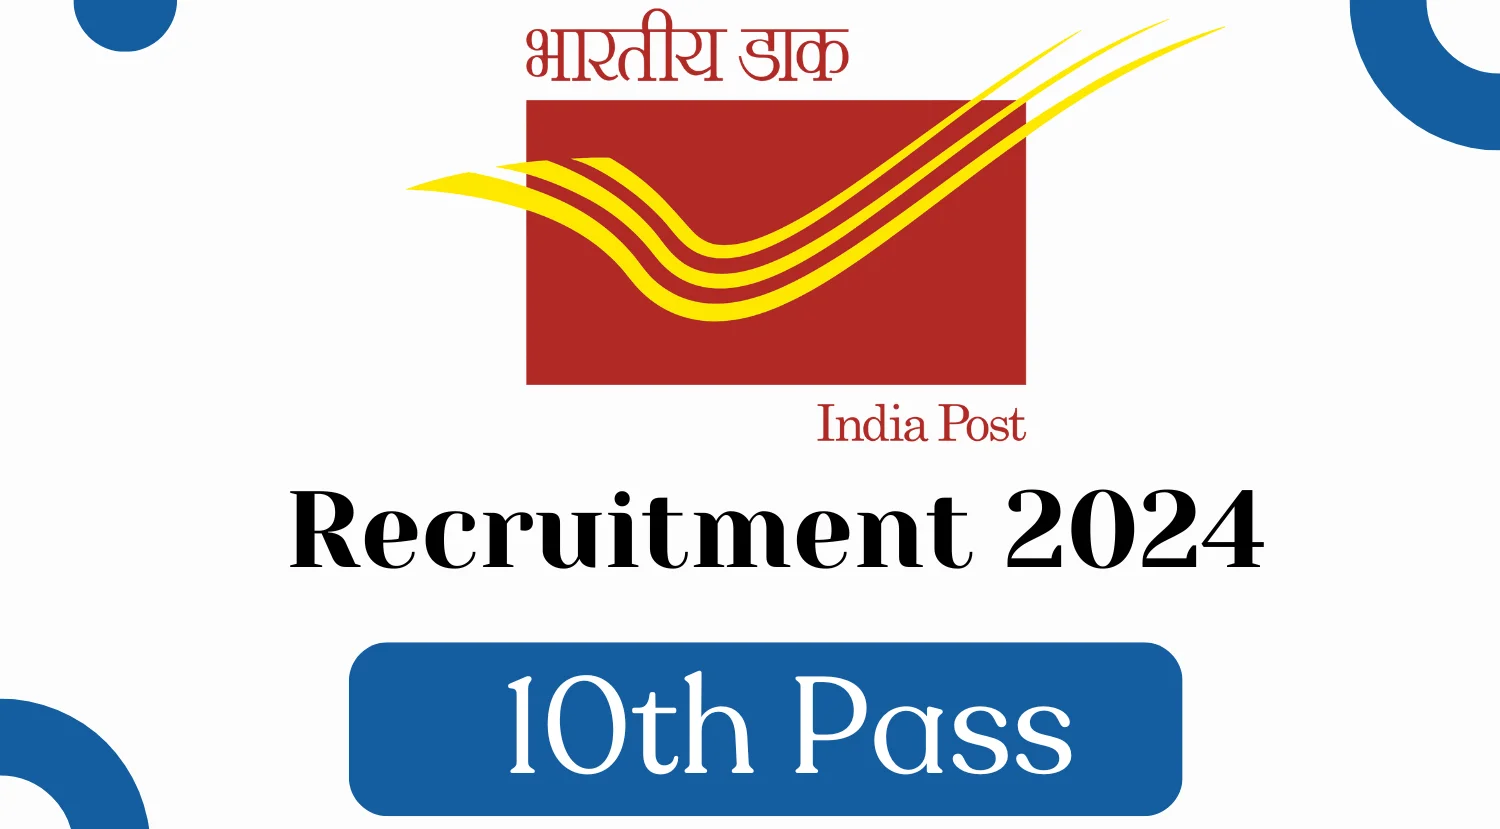 India Post Staff Car Driver Recruitment 2024